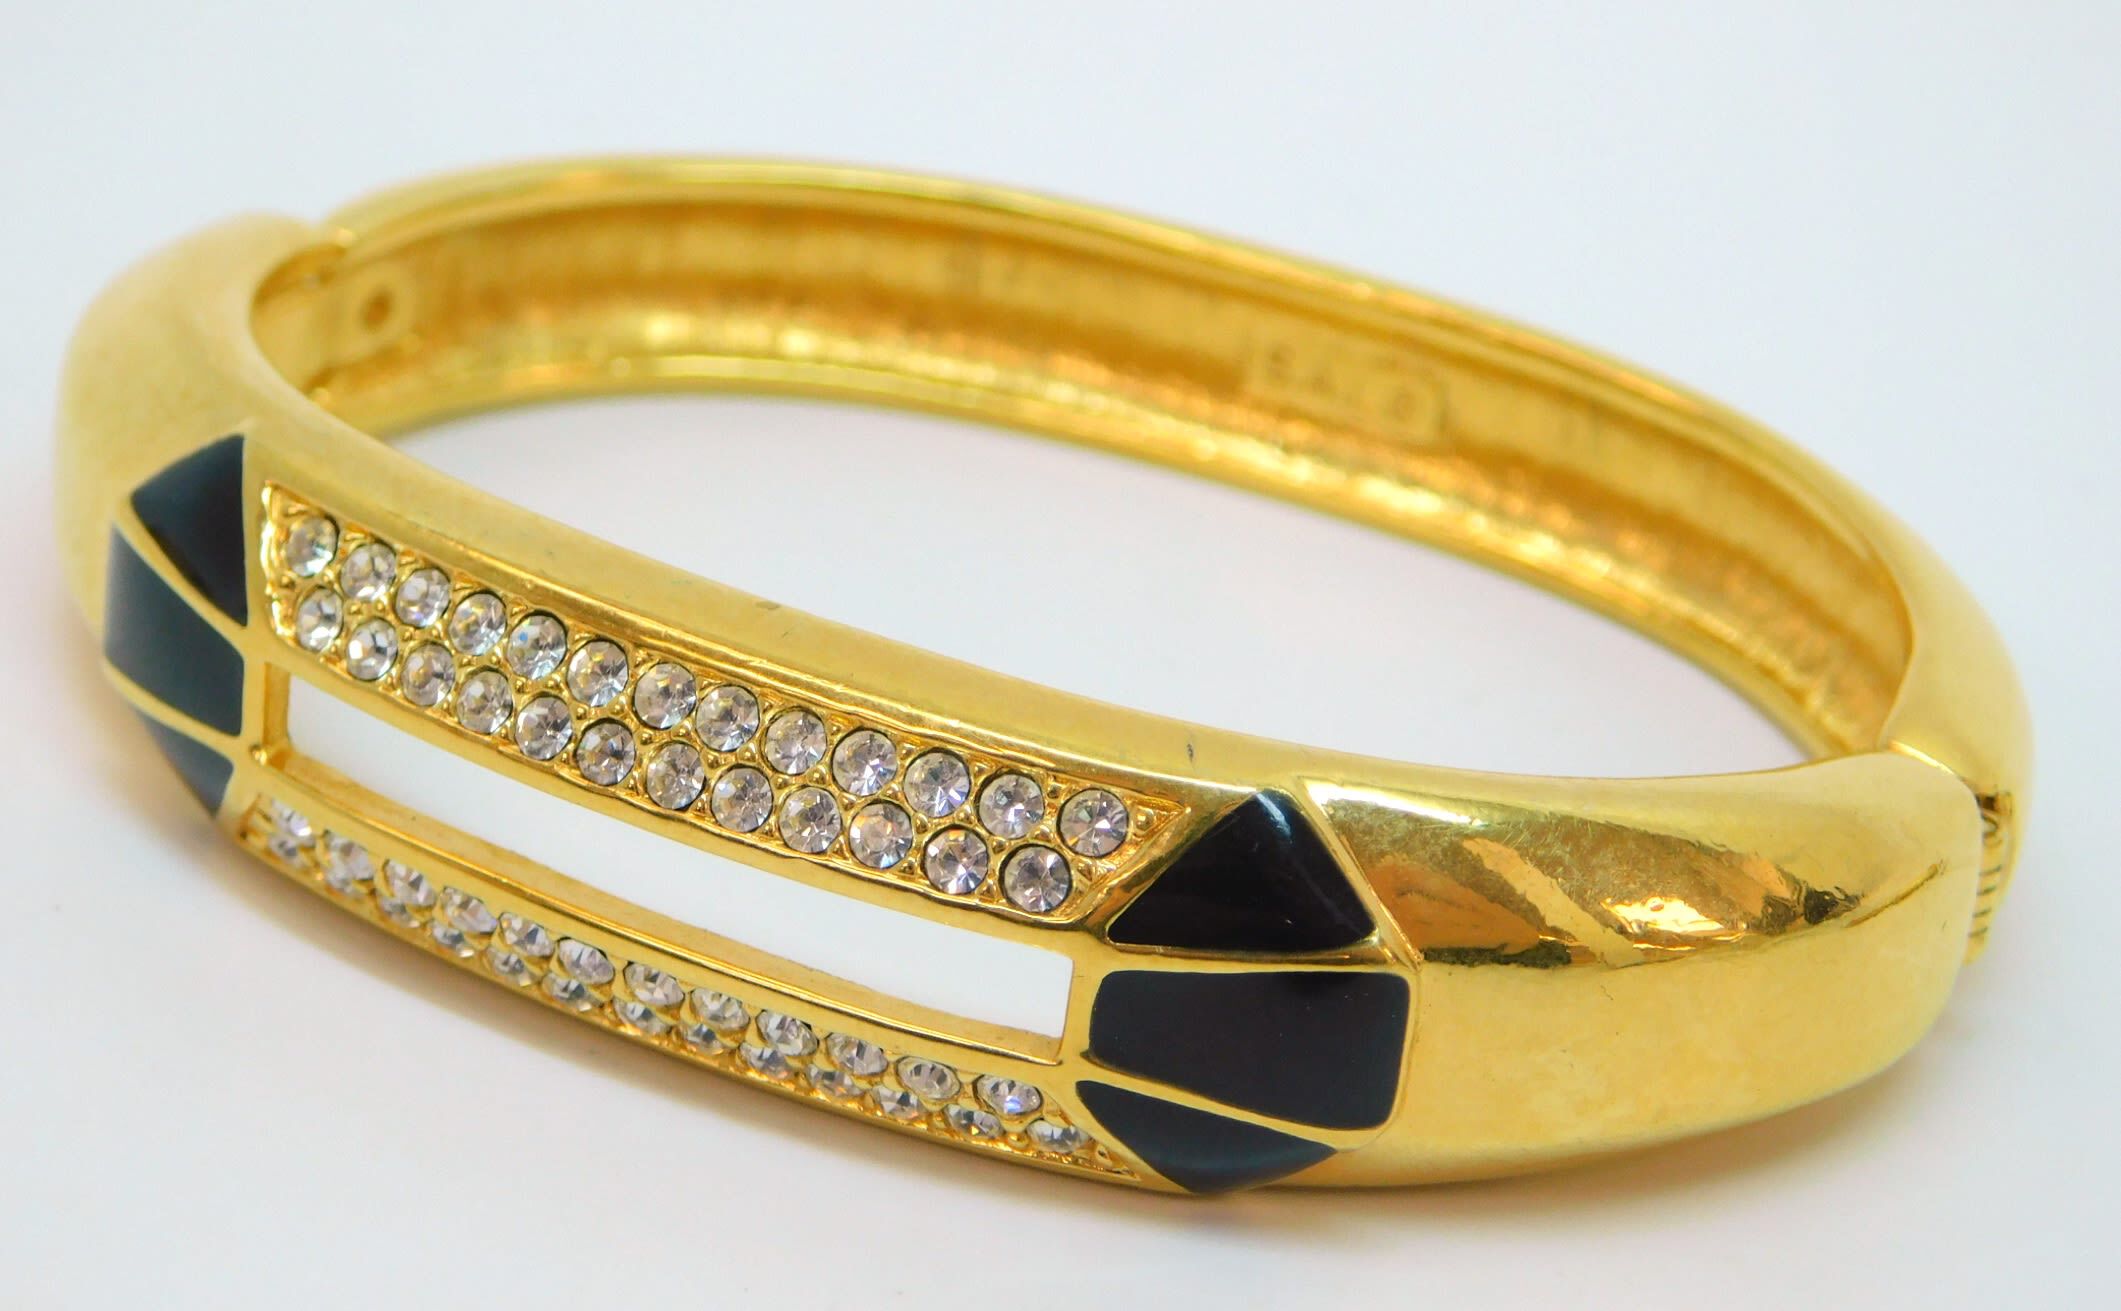 Black Stone Rudraksh With Diamond Best Quality Gold Plated Bracelet For Men  - Style C729, Rudraksh Bracelet, रुद्राक्ष ब्रेसलेट - Soni Fashion, Rajkot  | ID: 2852168912897